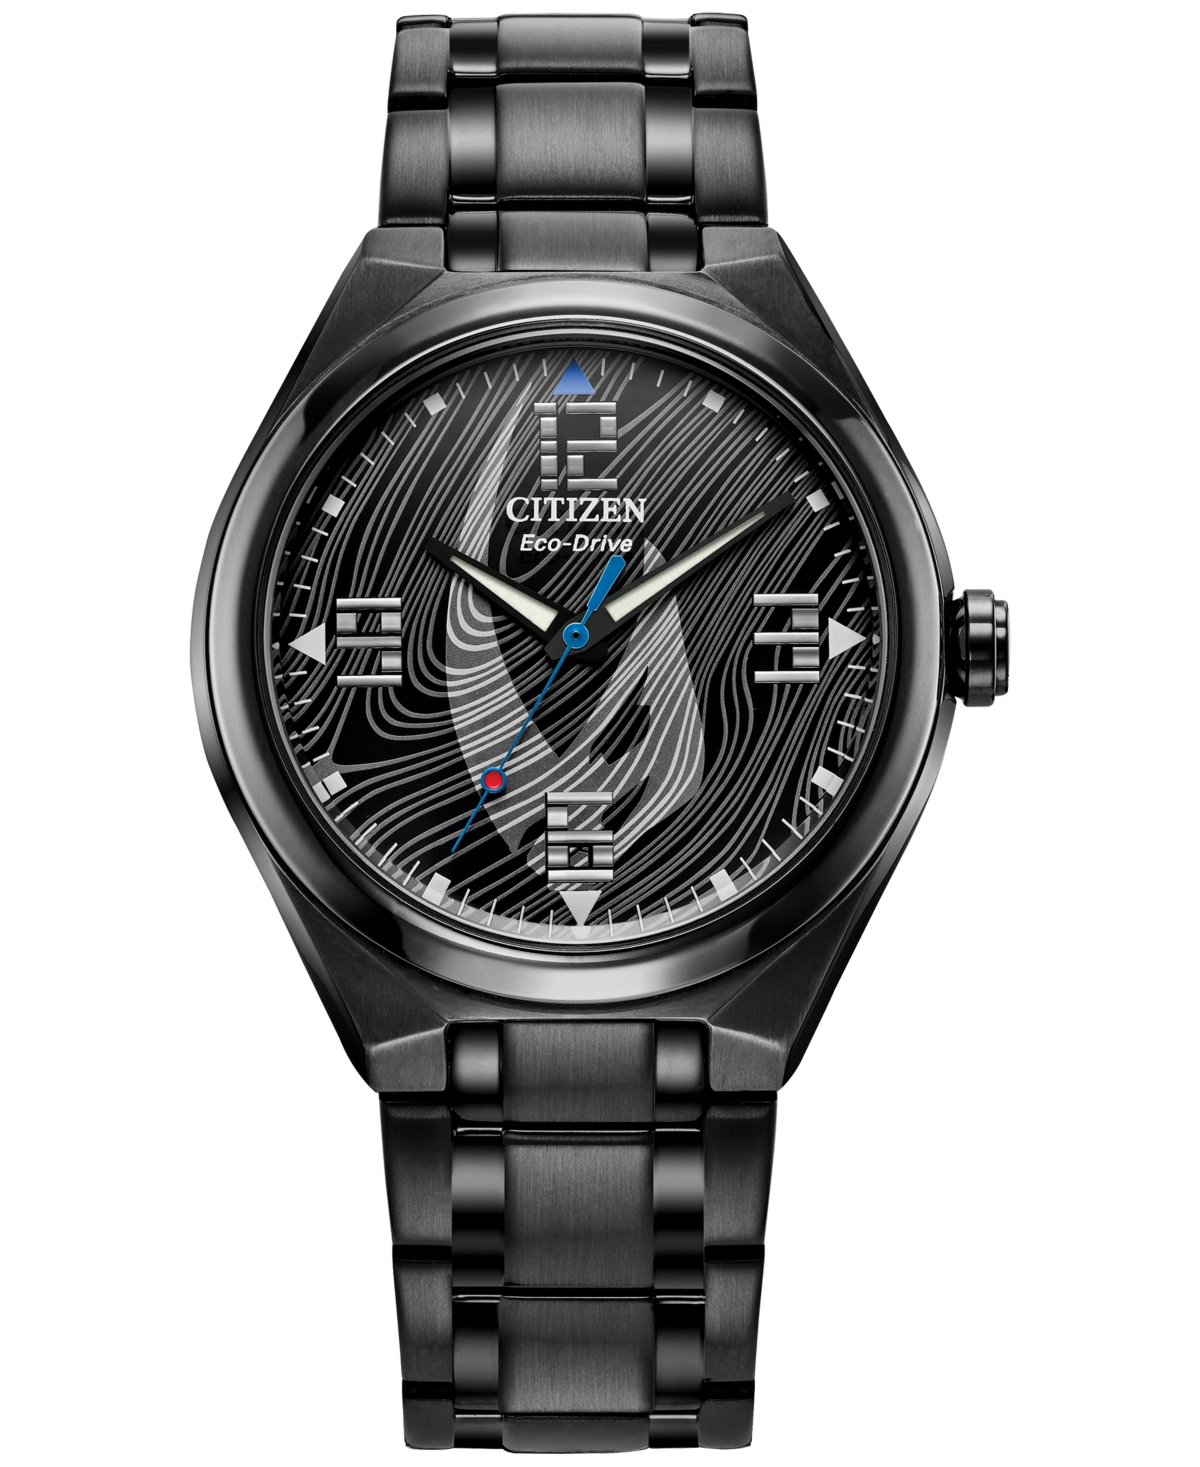 Citizen Eco-drive Men's Star Wars Mandalorian Black Stainless Steel Bracelet Watch 42mm